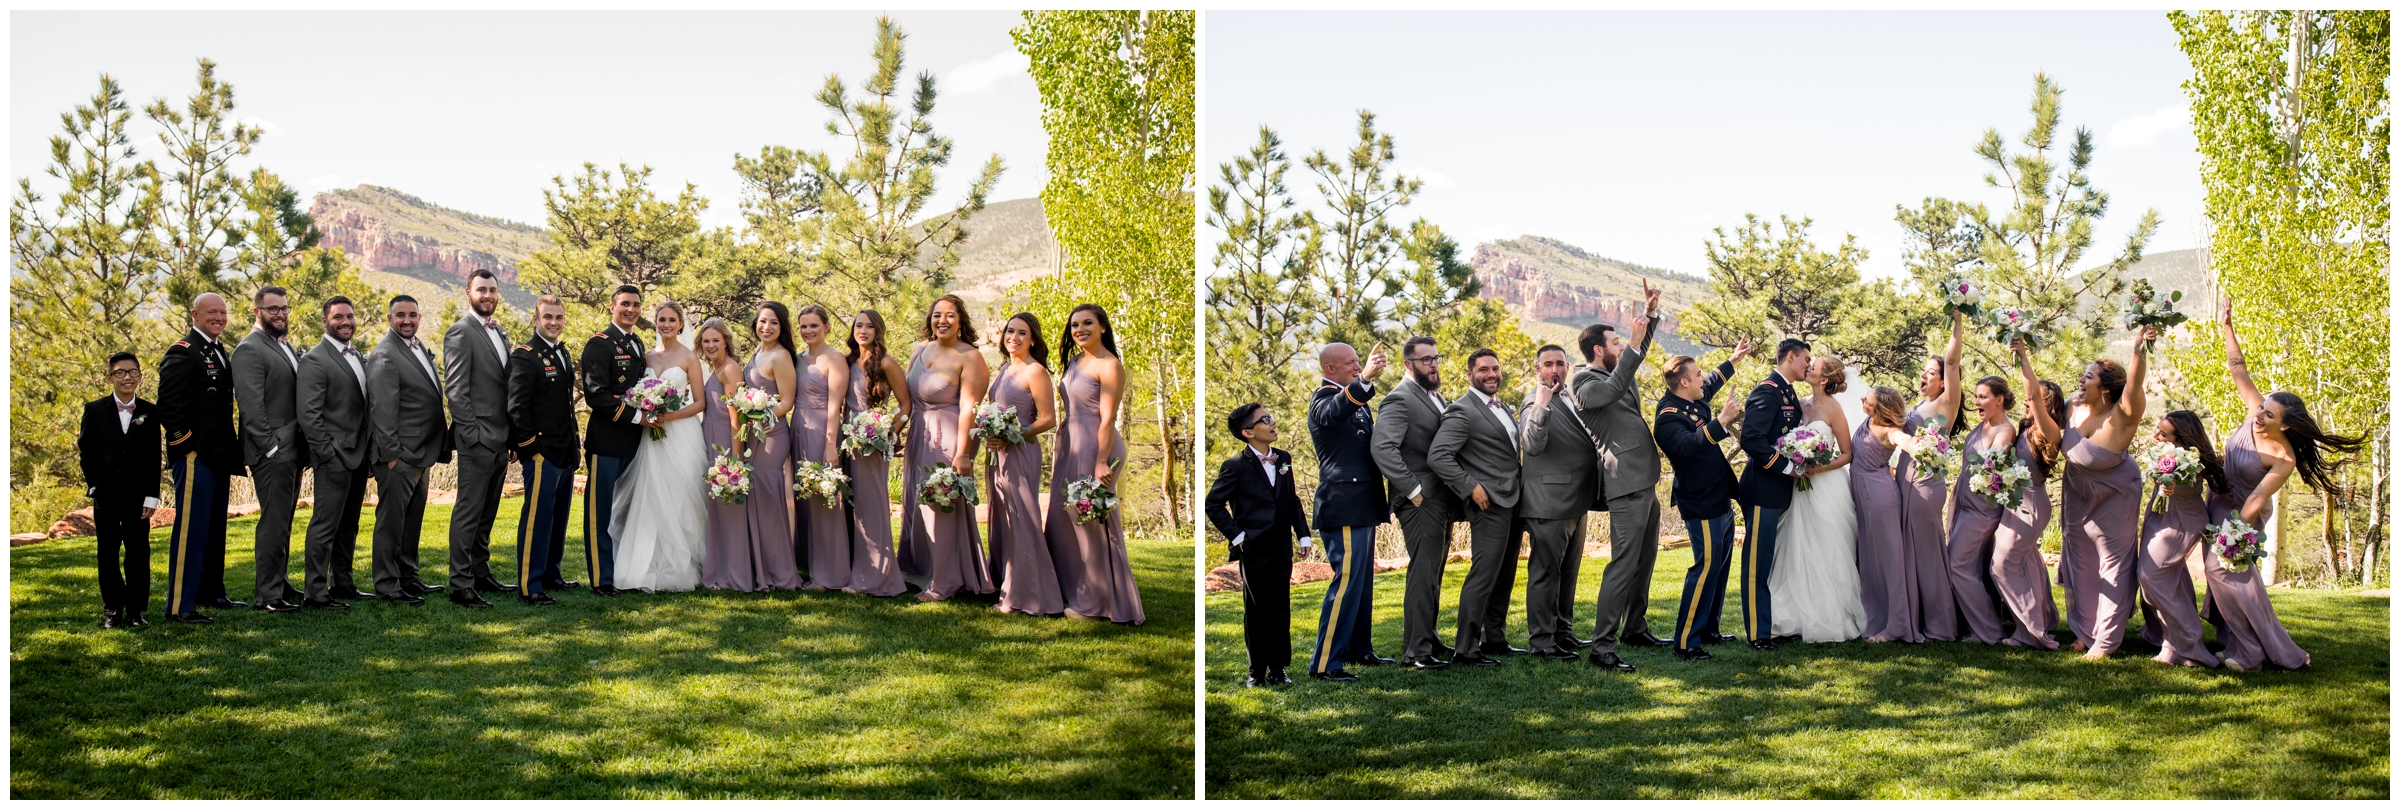 wedding party in gray and lilac purple at Colorado summer wedding